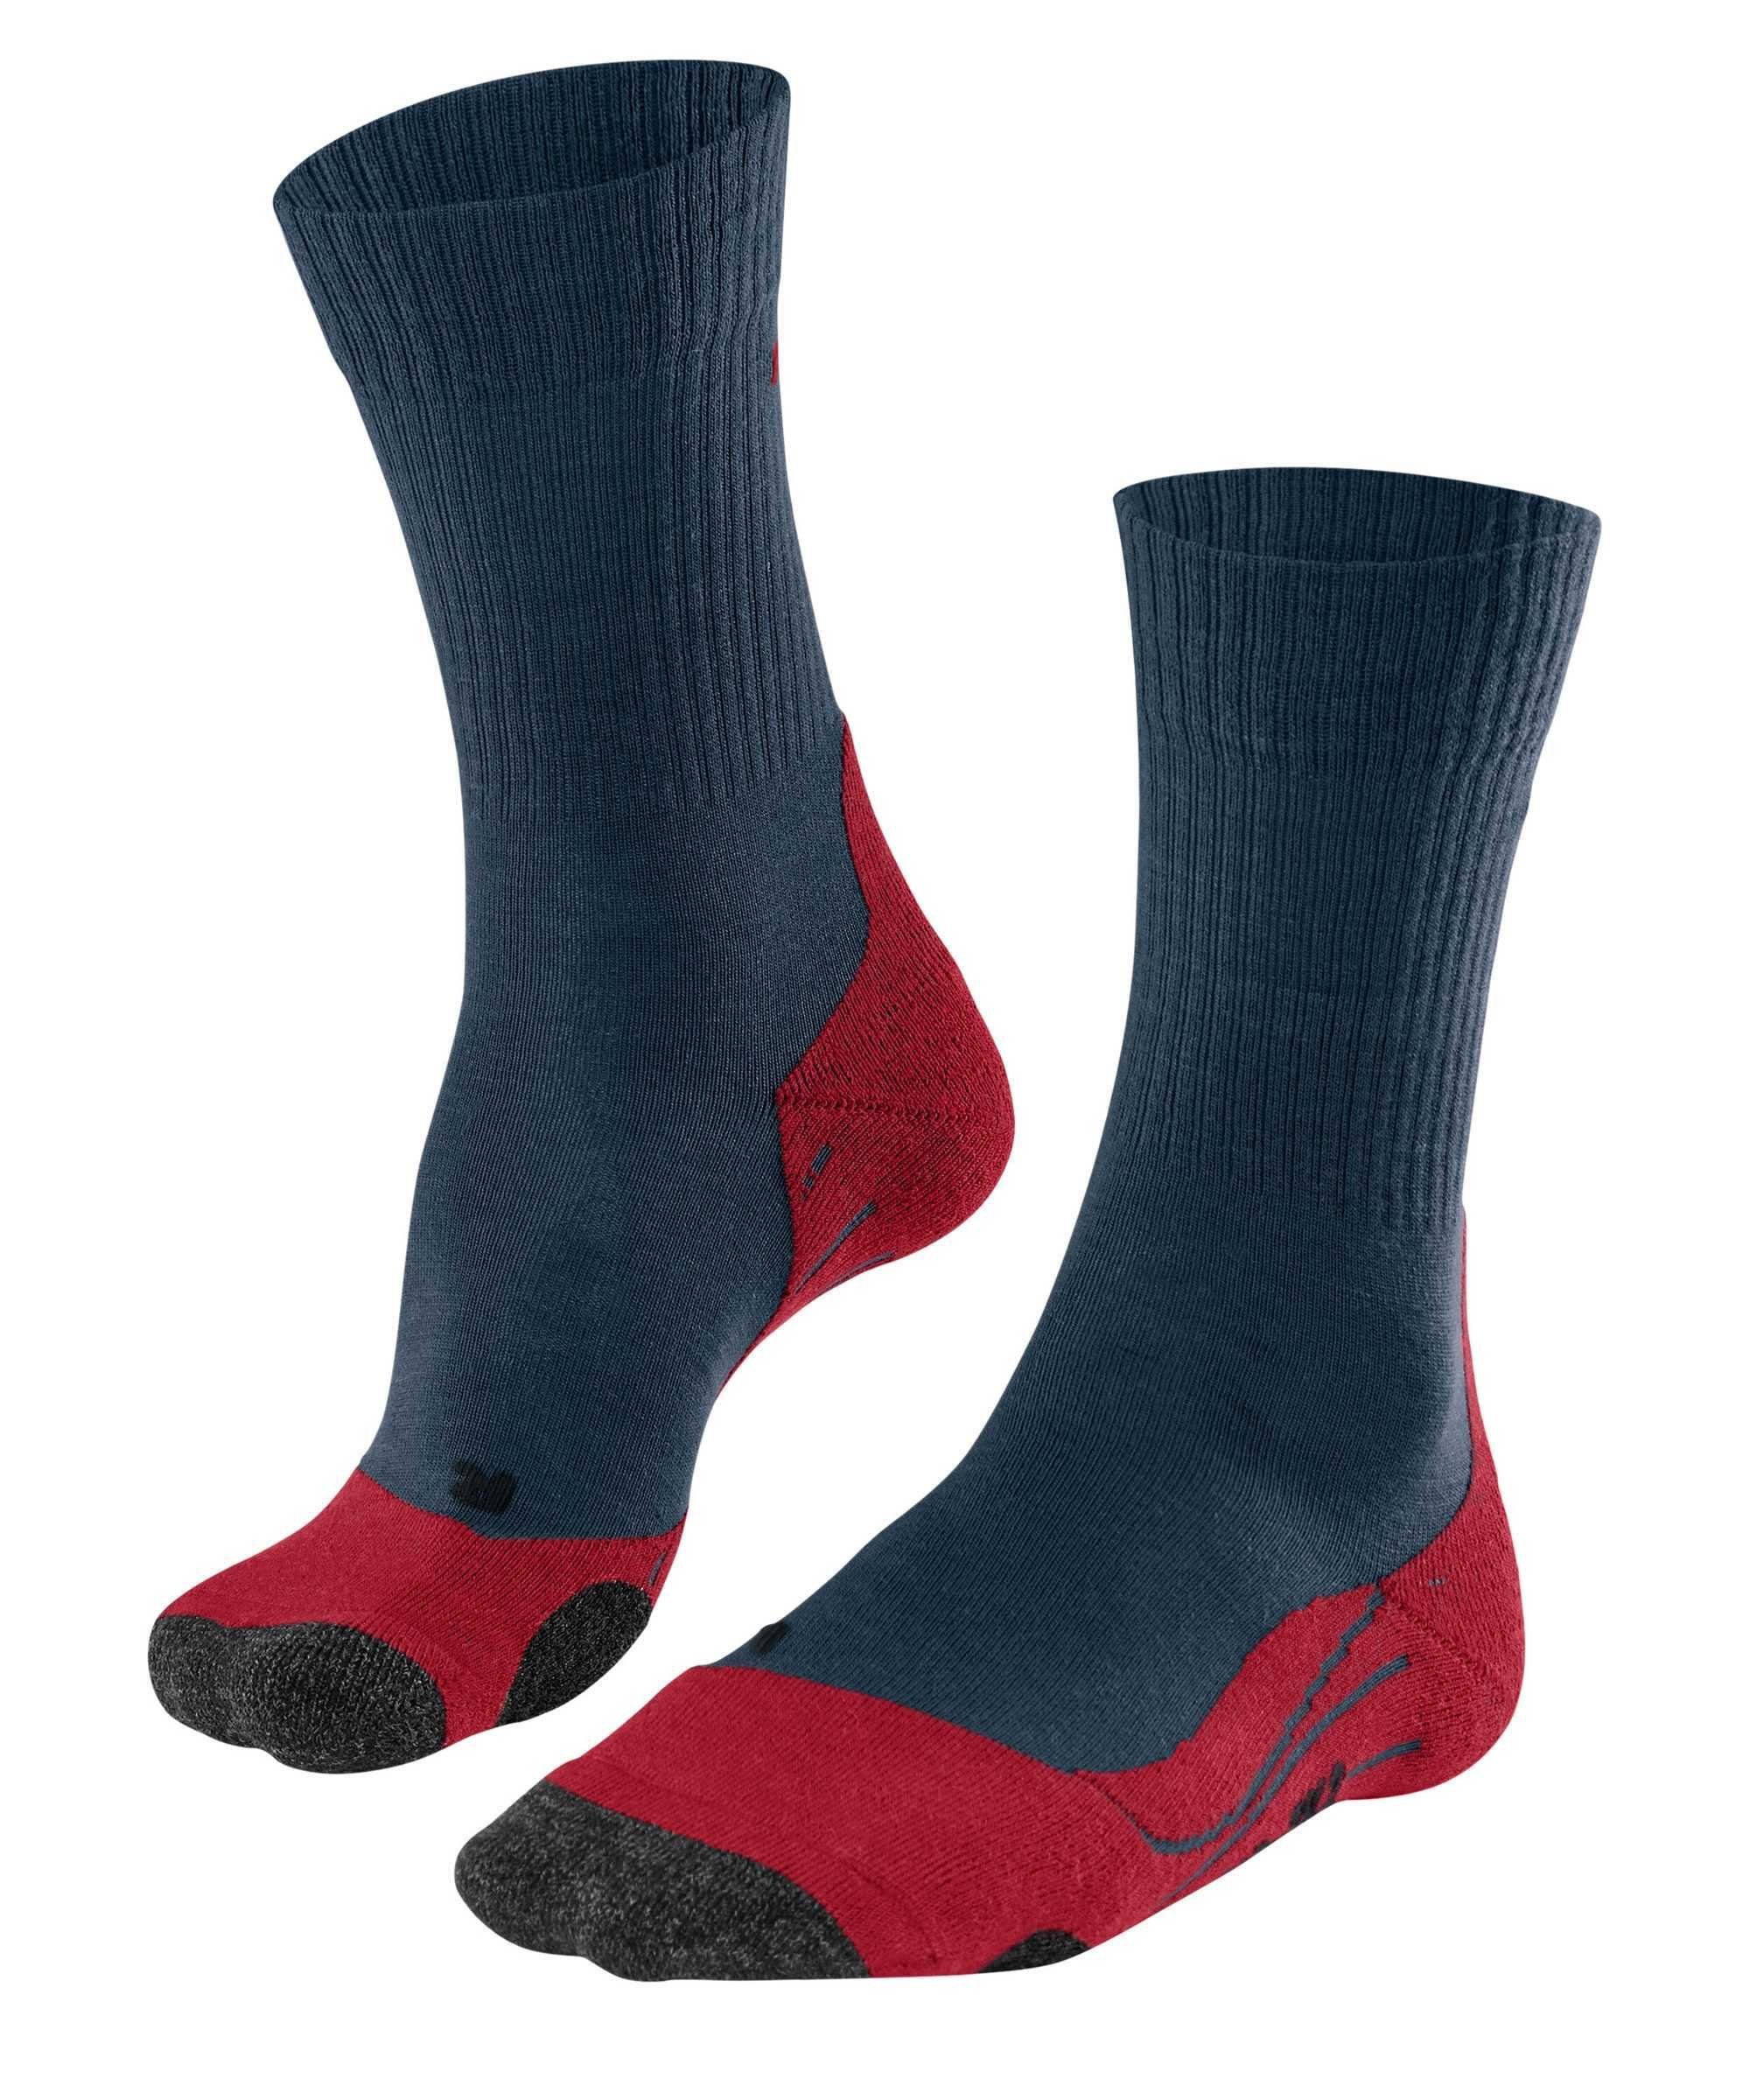 Socken - Herren Trekking TK2, FALKE Polsterung Blau/Rot Sportsocken Socken (Nautica)